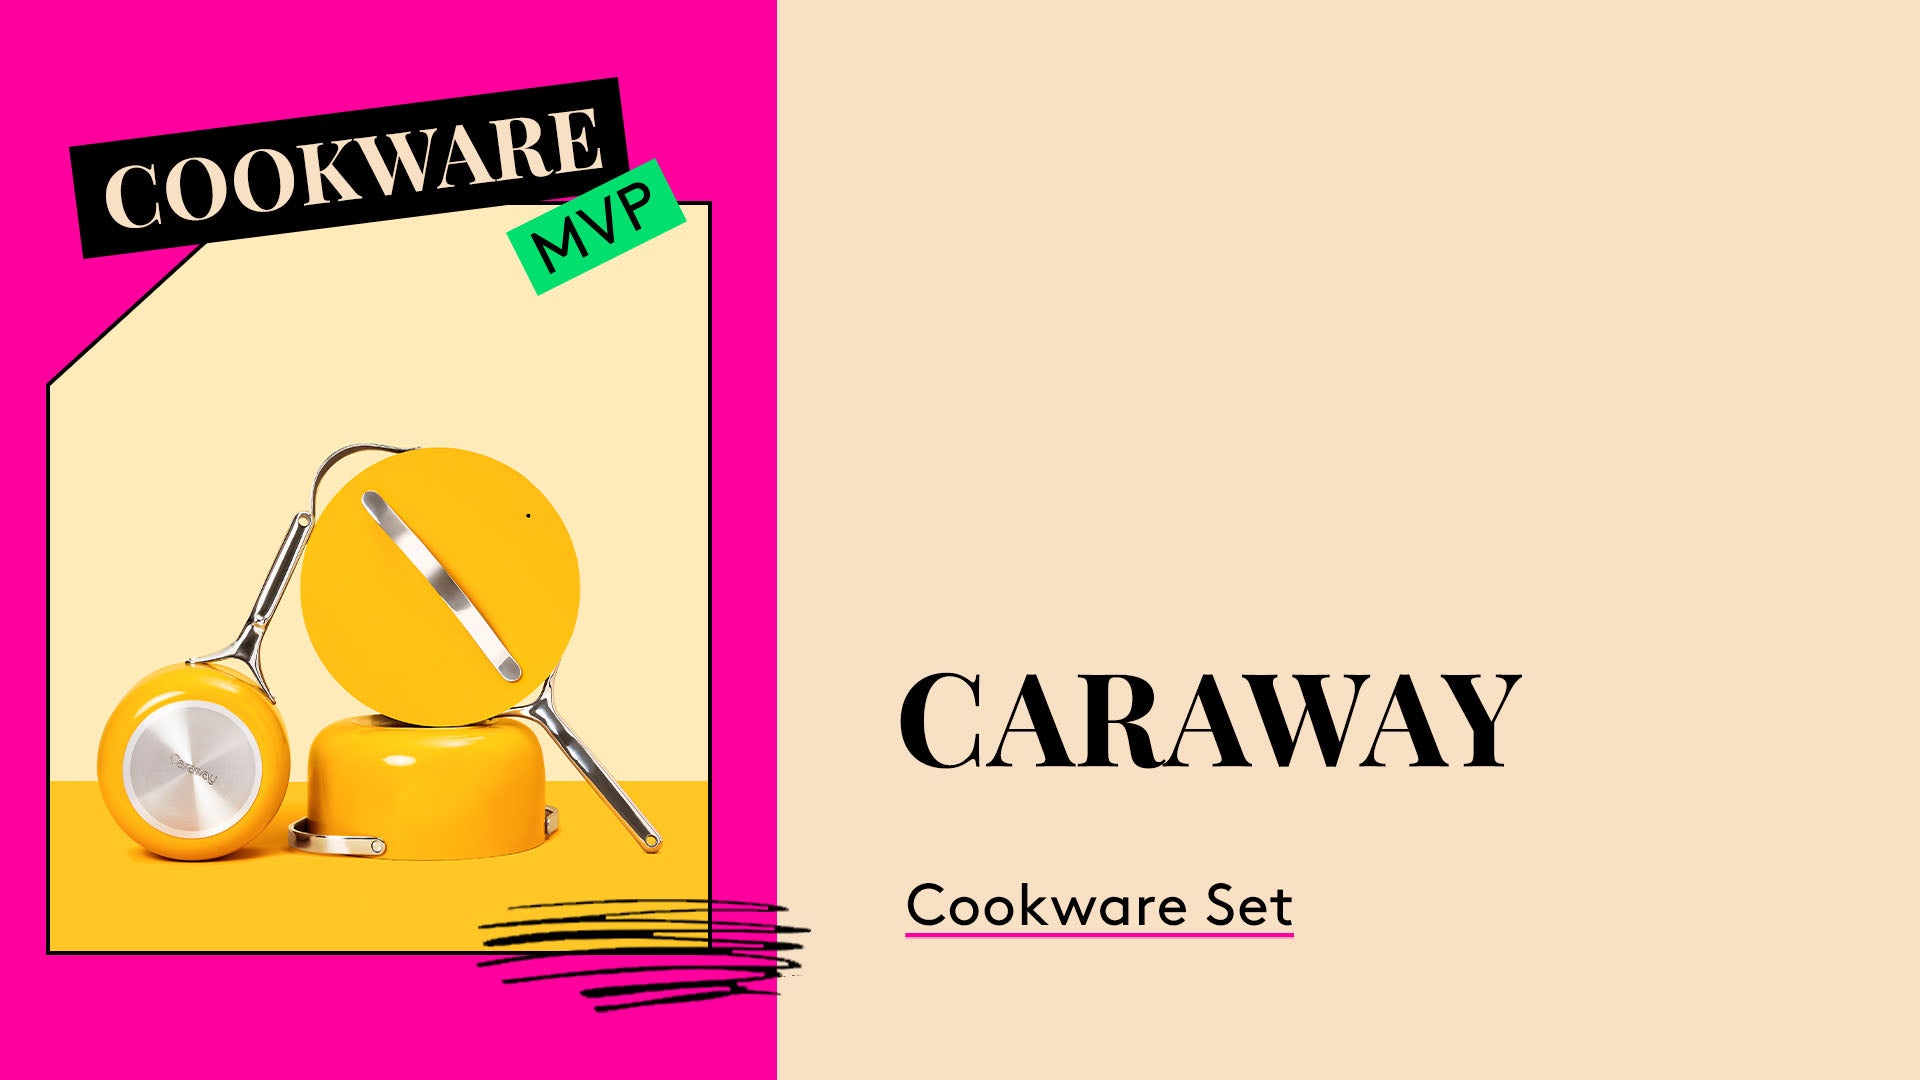 Cookware MVP. Caraway Cookware Set.